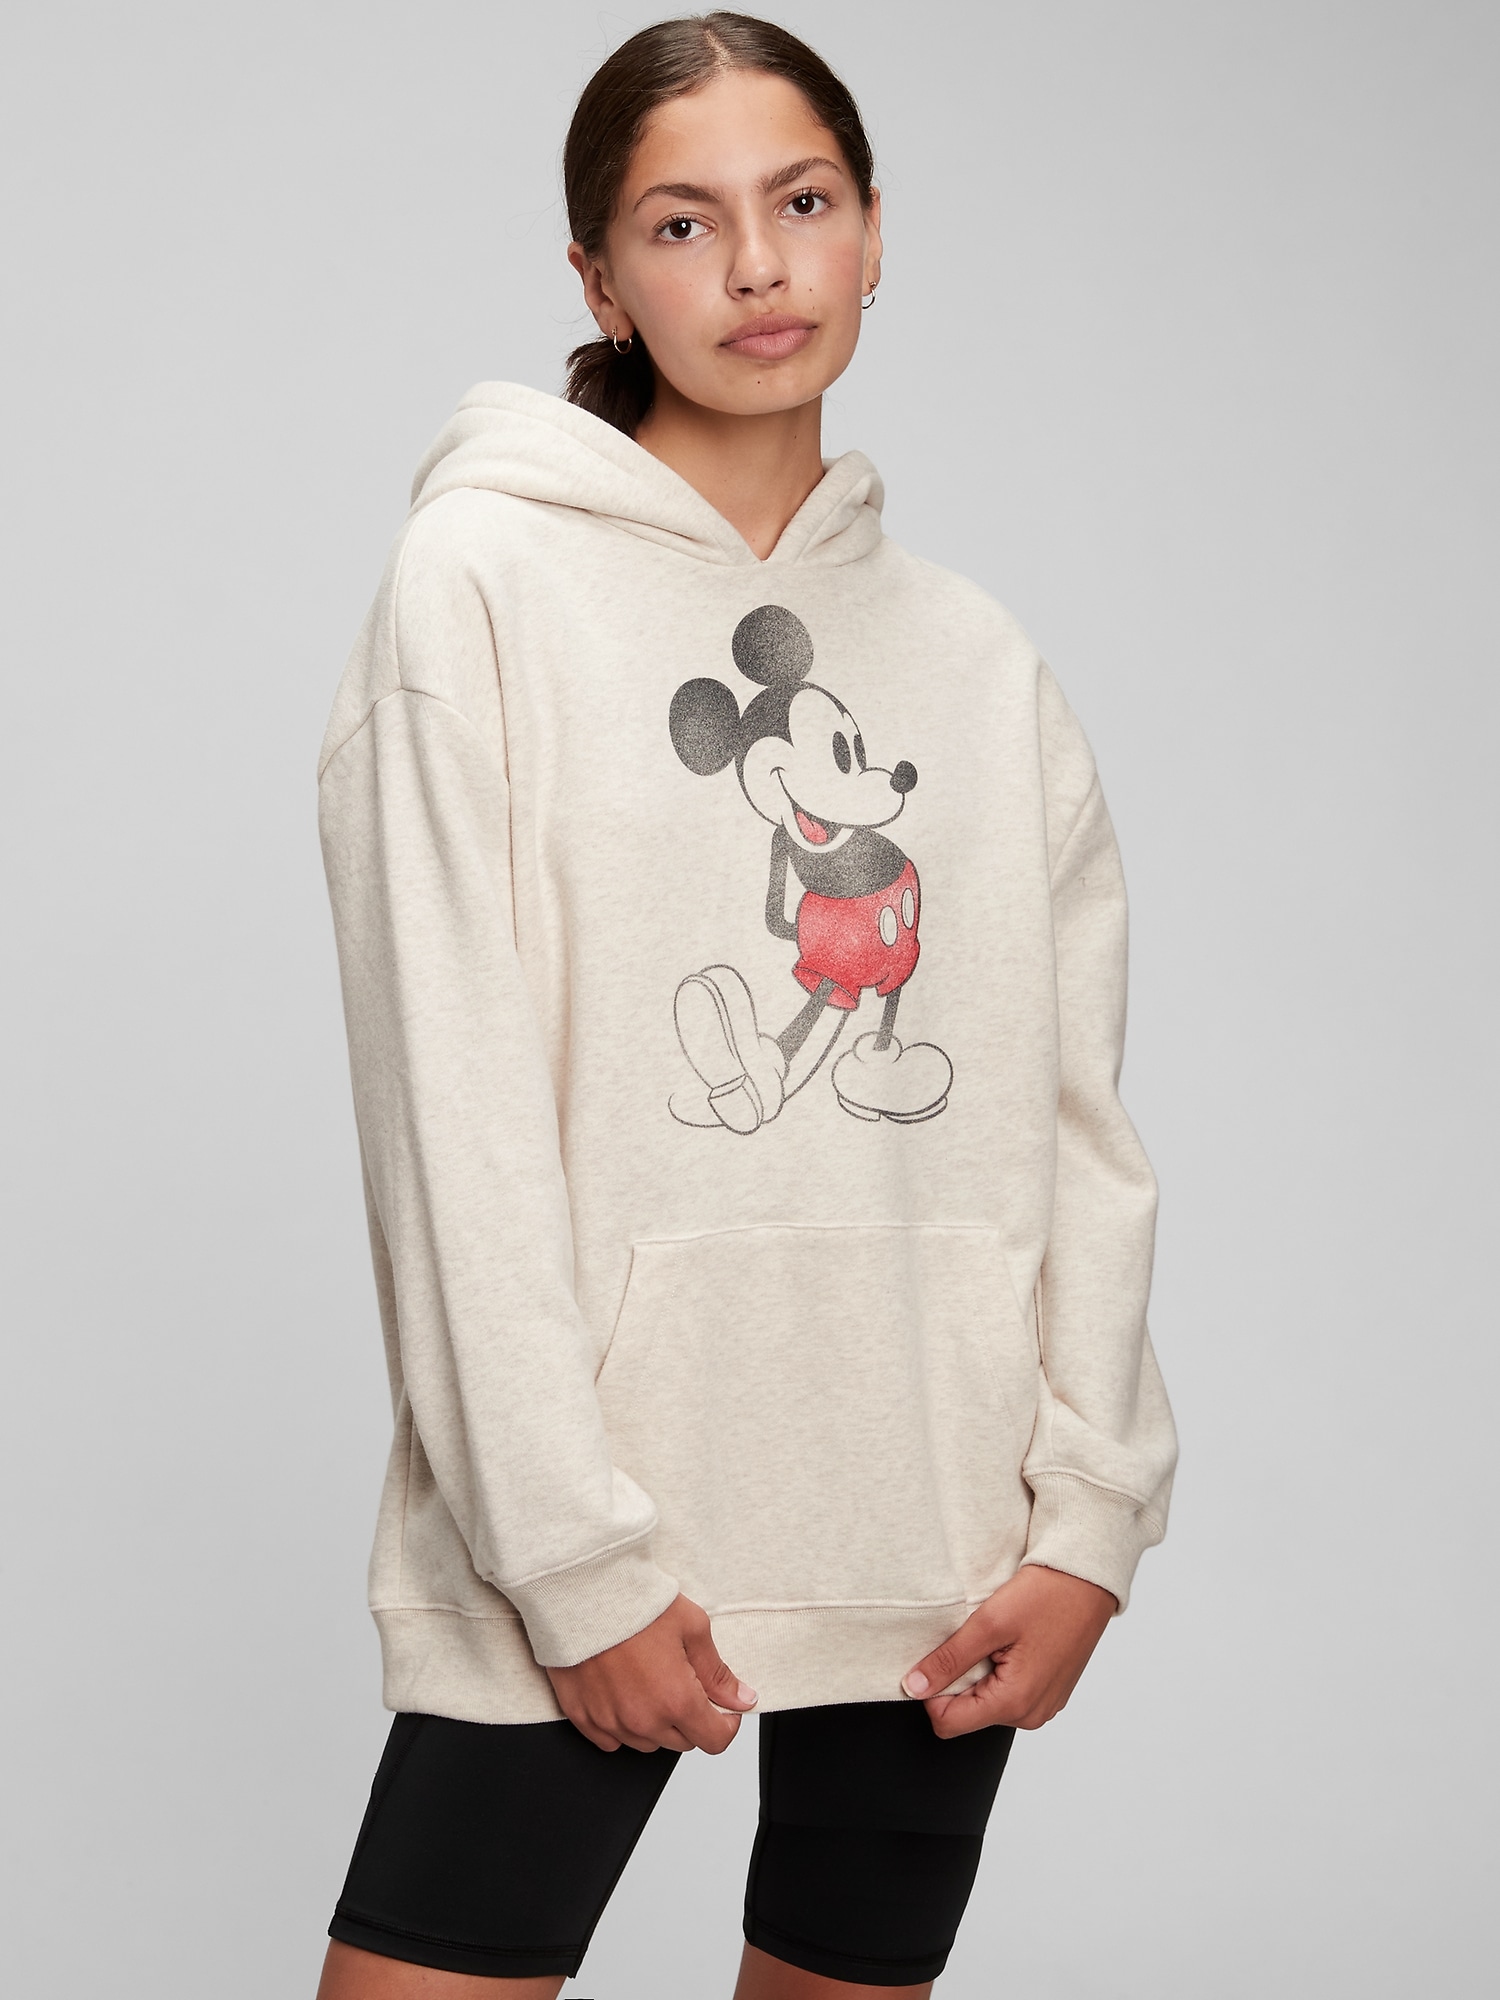 Girls Disney Parks Sweatshirt with hood size XL